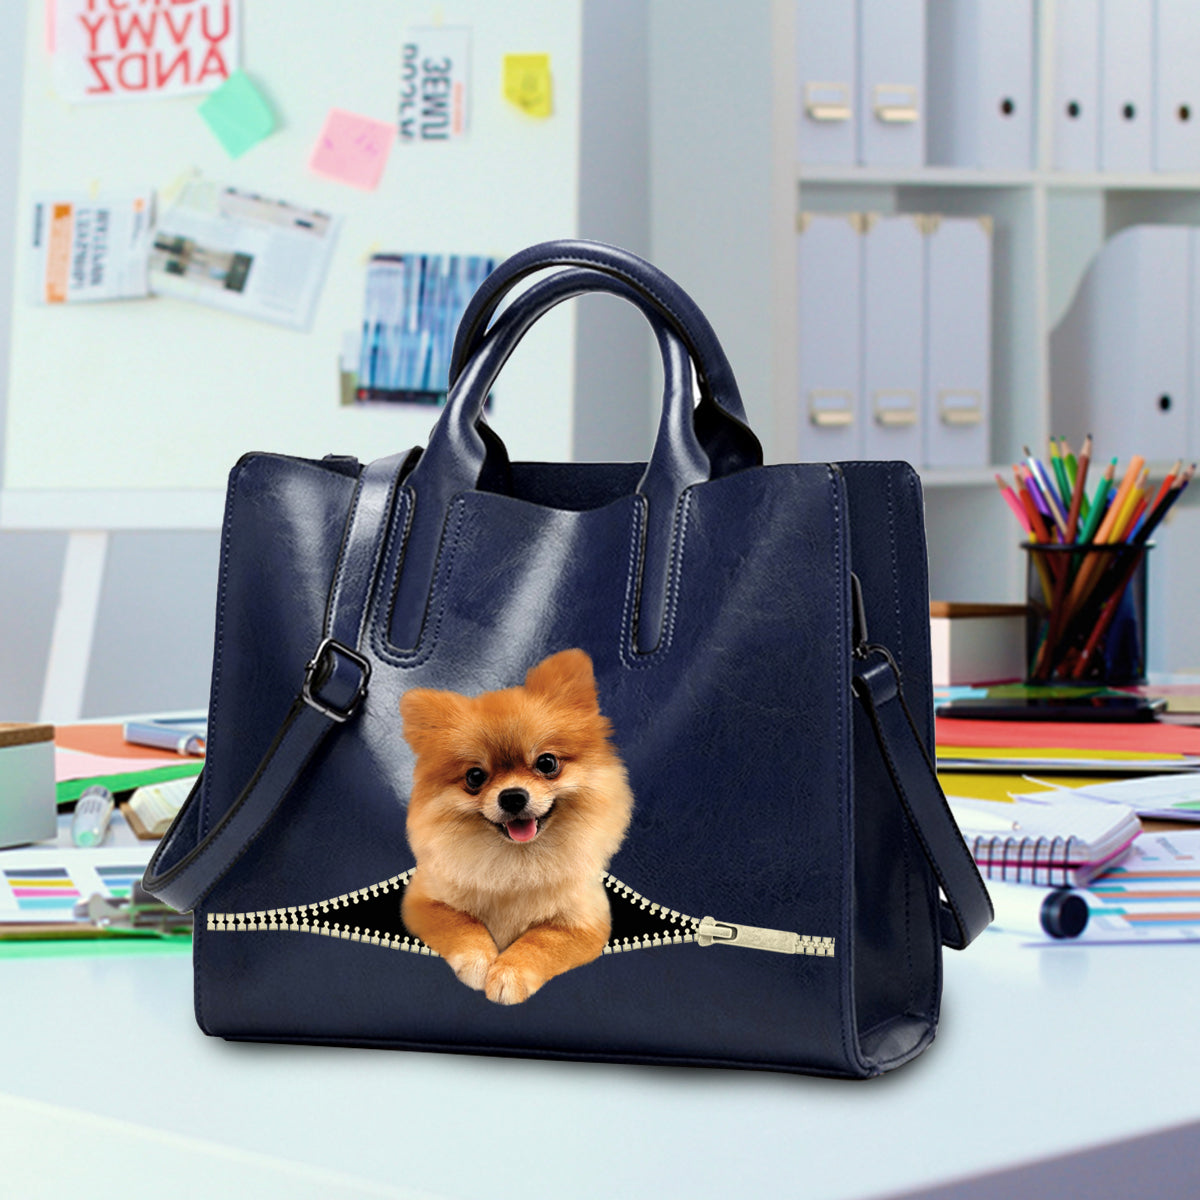 Reduce Stress At Work With Pomeranian - Luxury Handbag V1